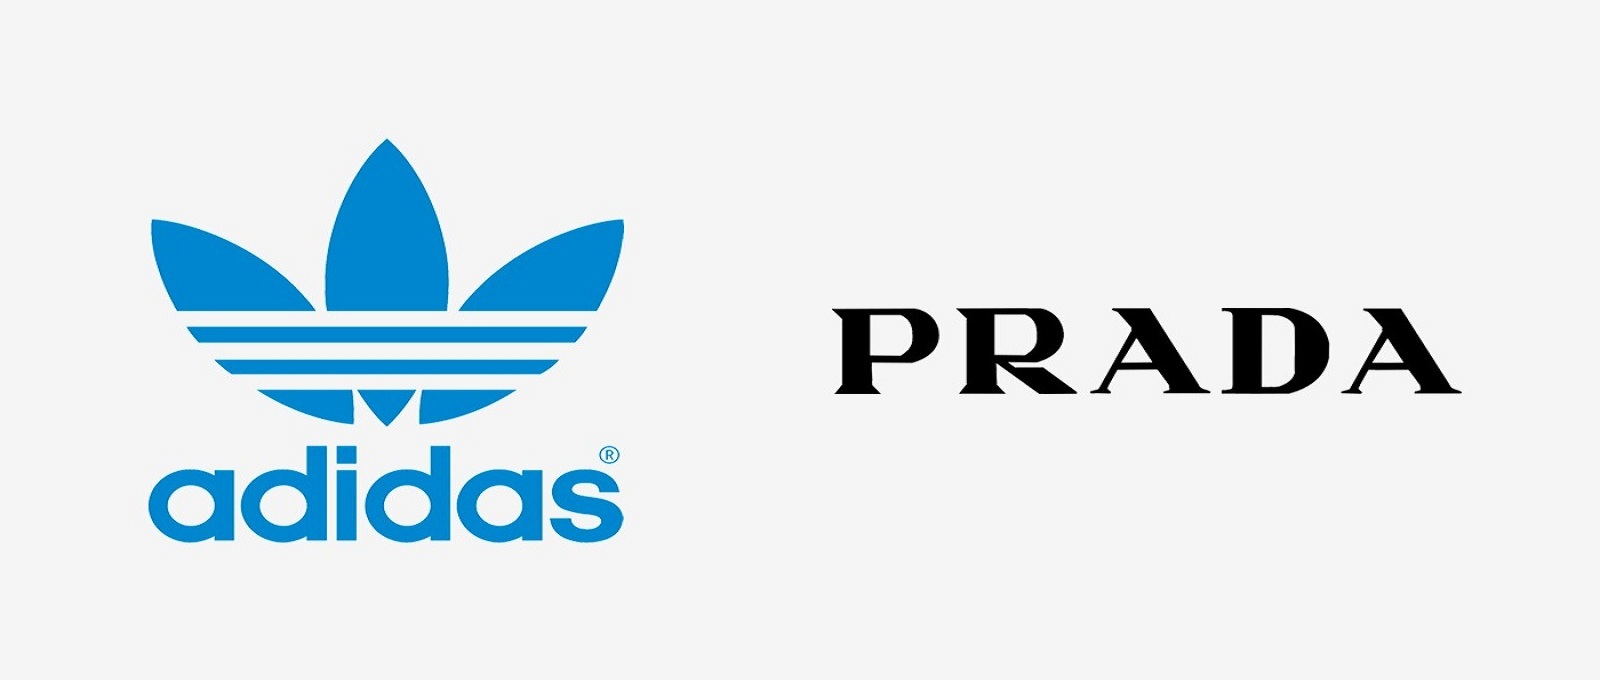 Adidas and Prada Collaboration may Team-up Soon - The Leaders Globe Media